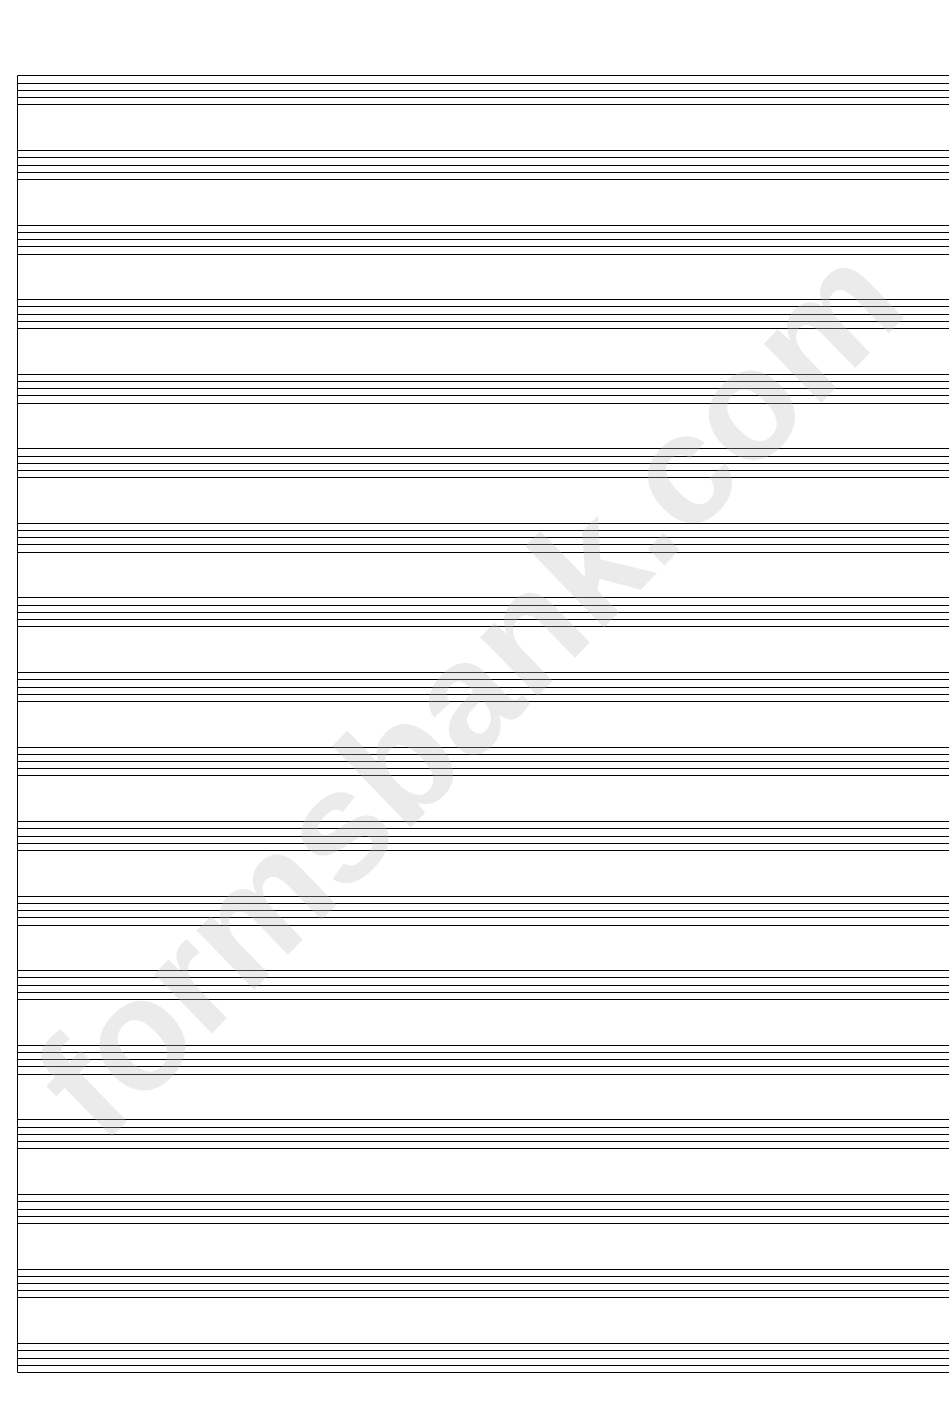 Big Band, Blank Clef, Neutral Layout (A4 Portrait) Blank Sheet Music